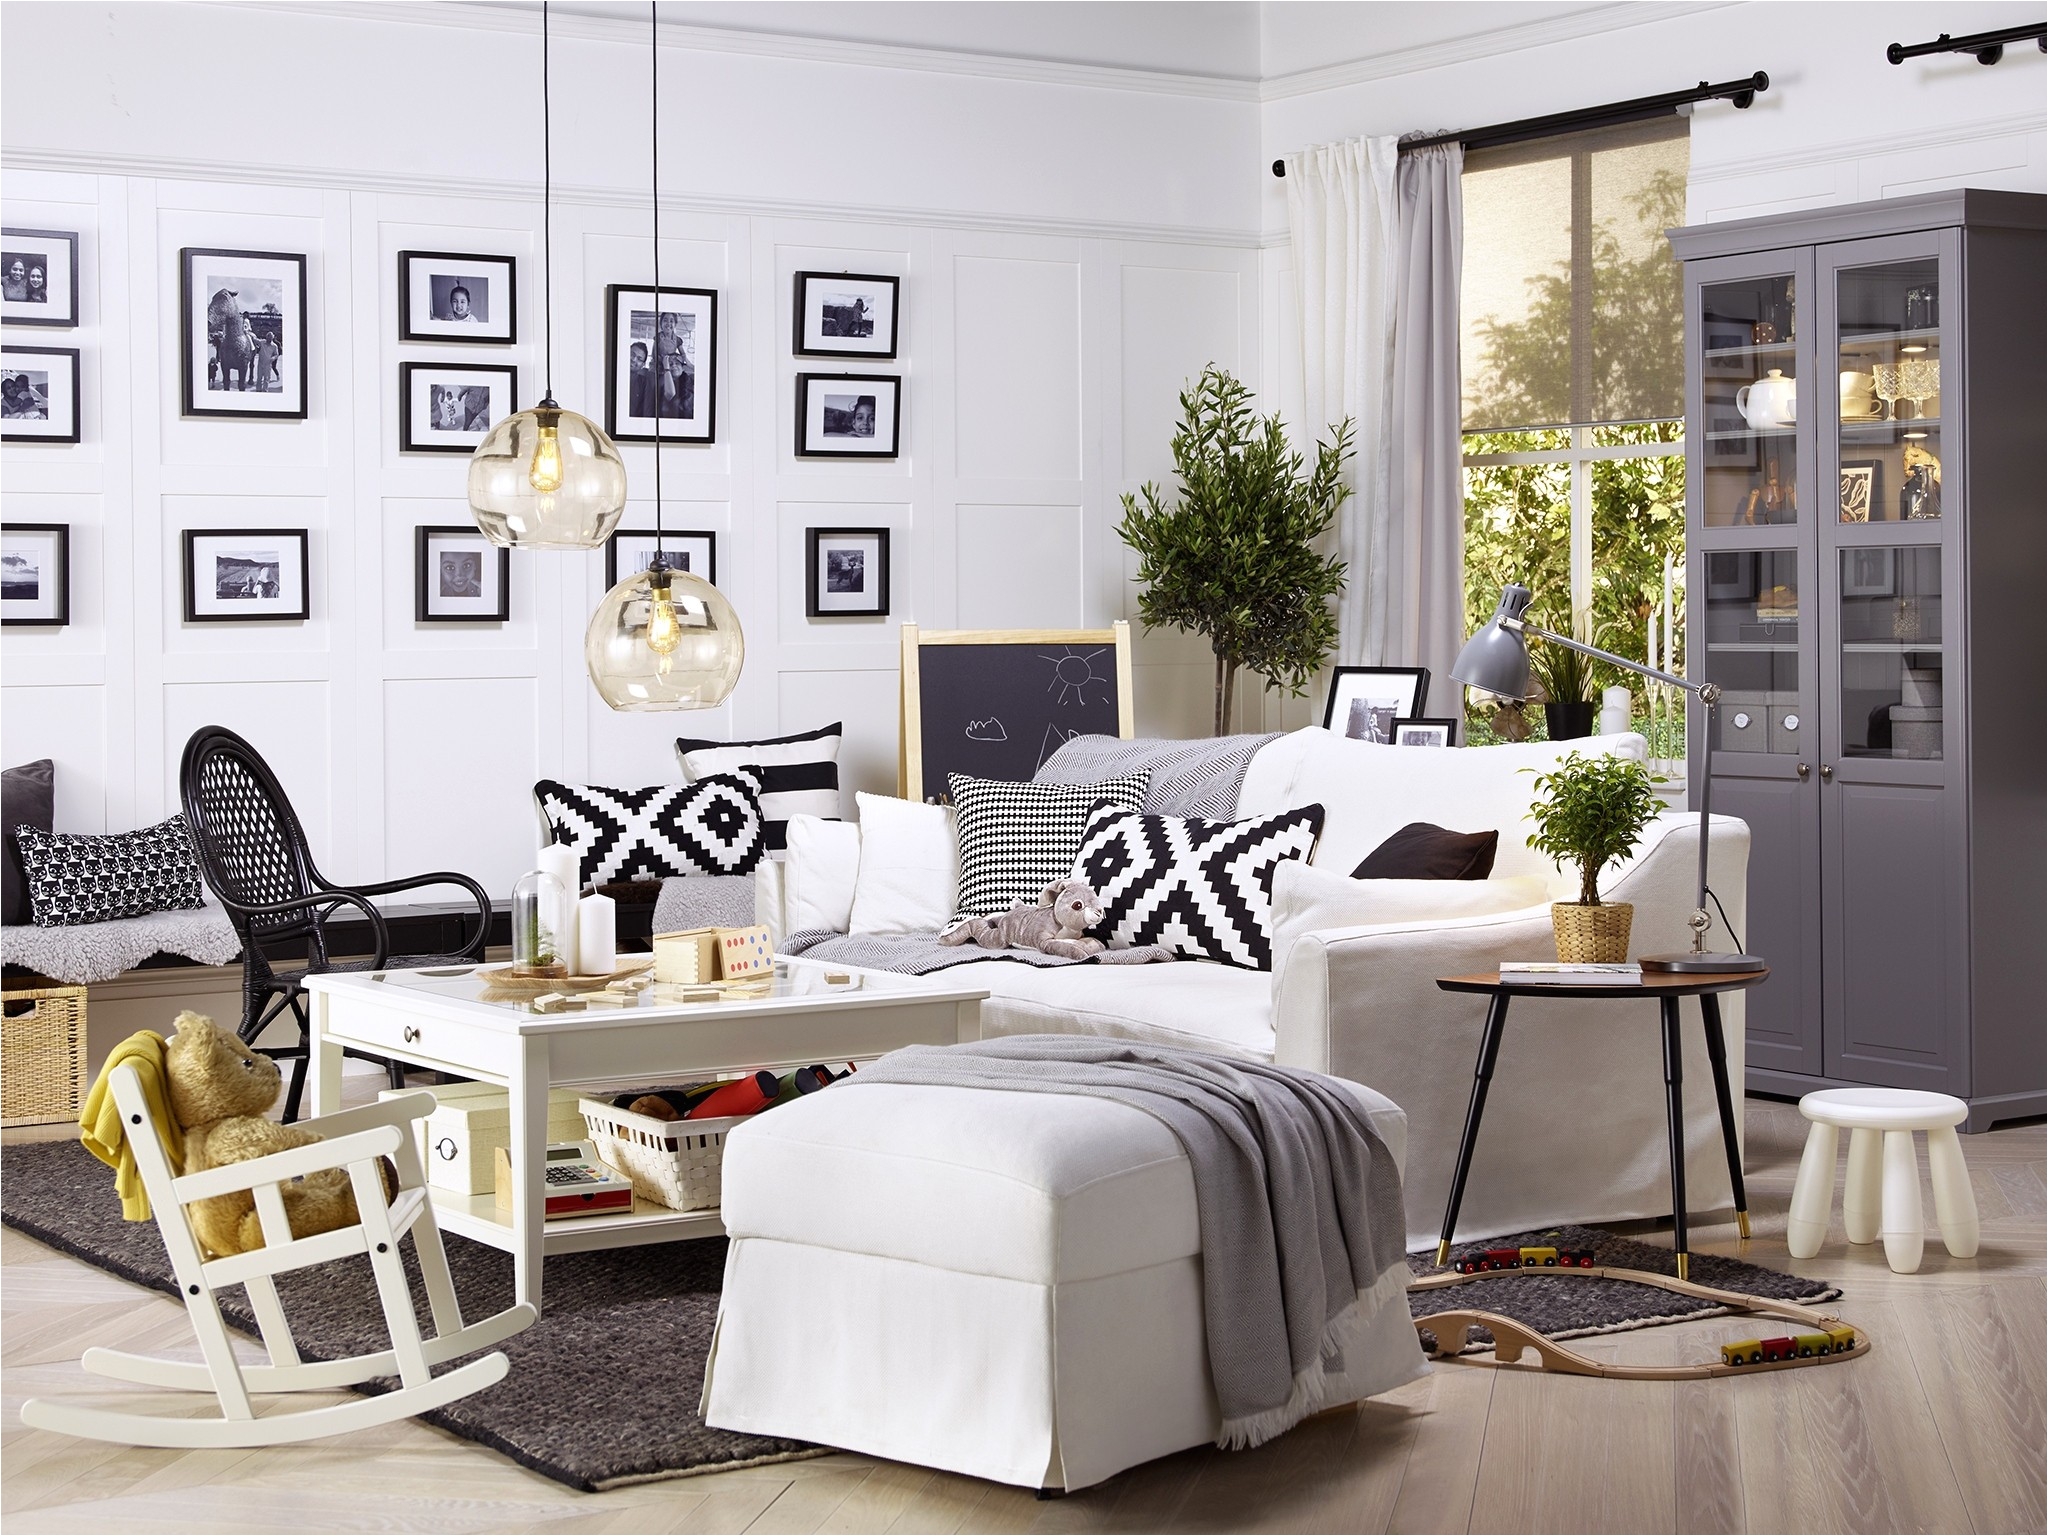 Green Design Furniture Inspirationa Living Room Furniture Contemporary Design Elegant Shaker Chairs 0d